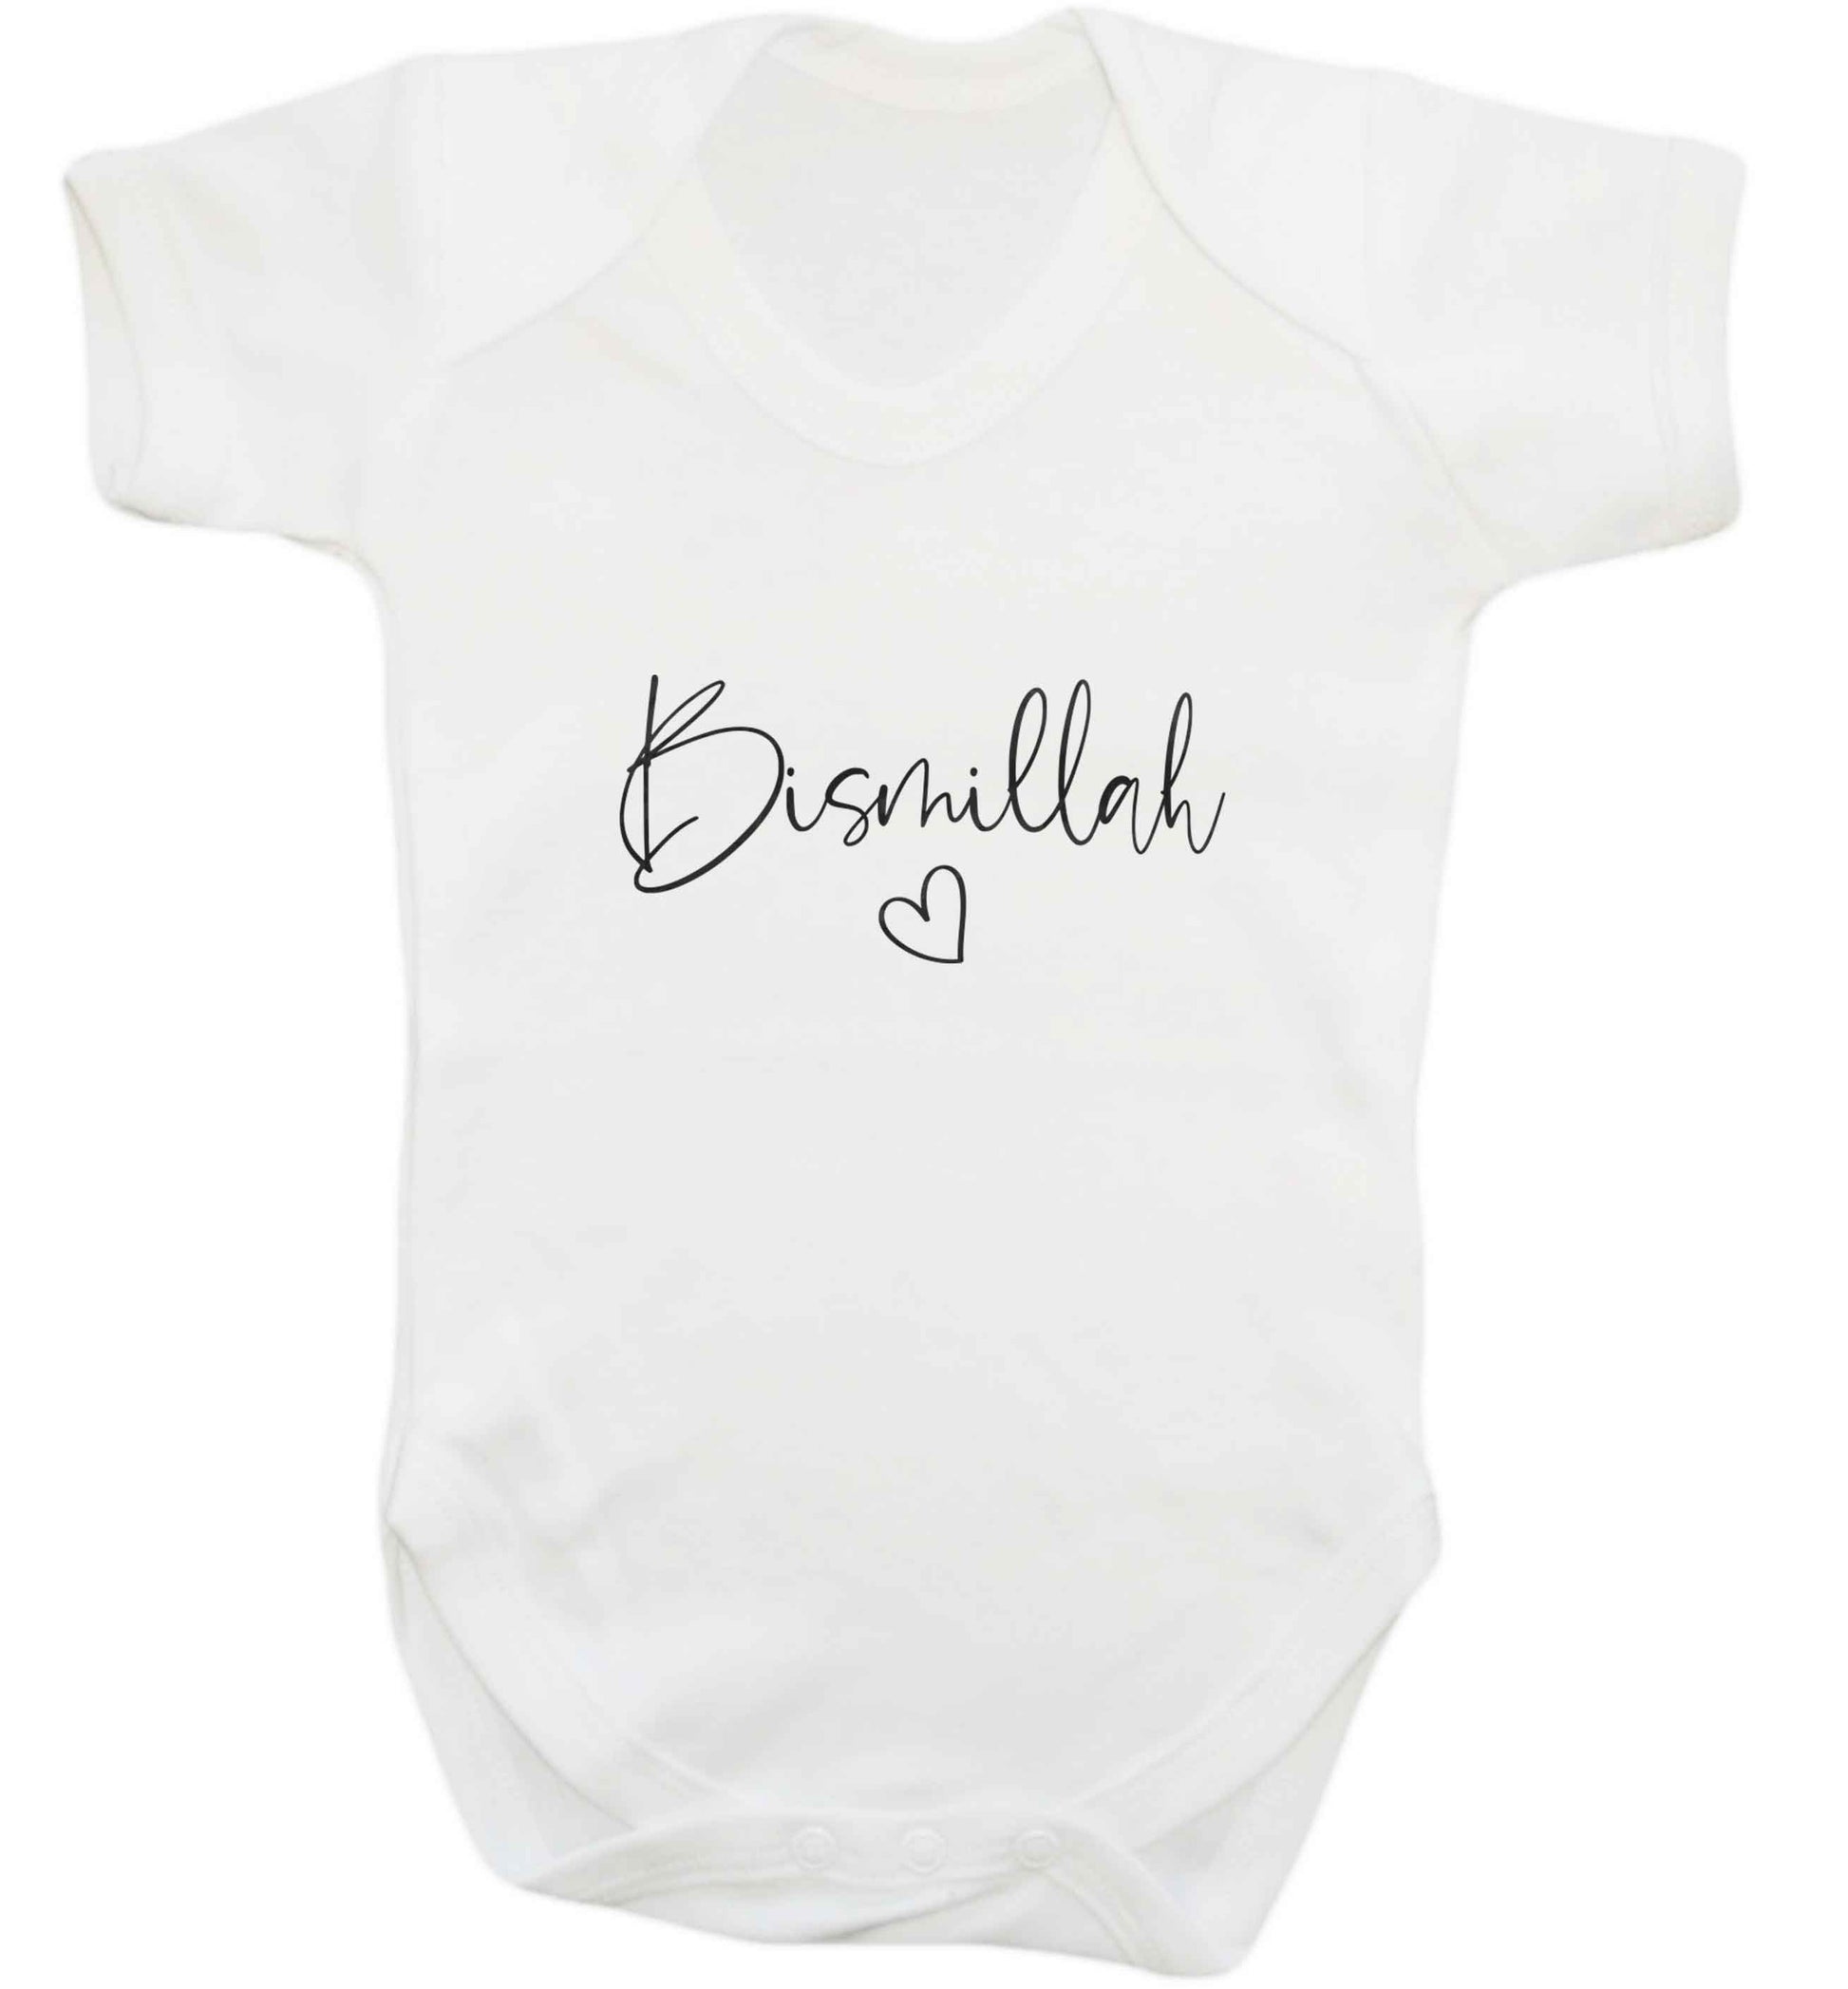 Bismillah baby vest white 18-24 months